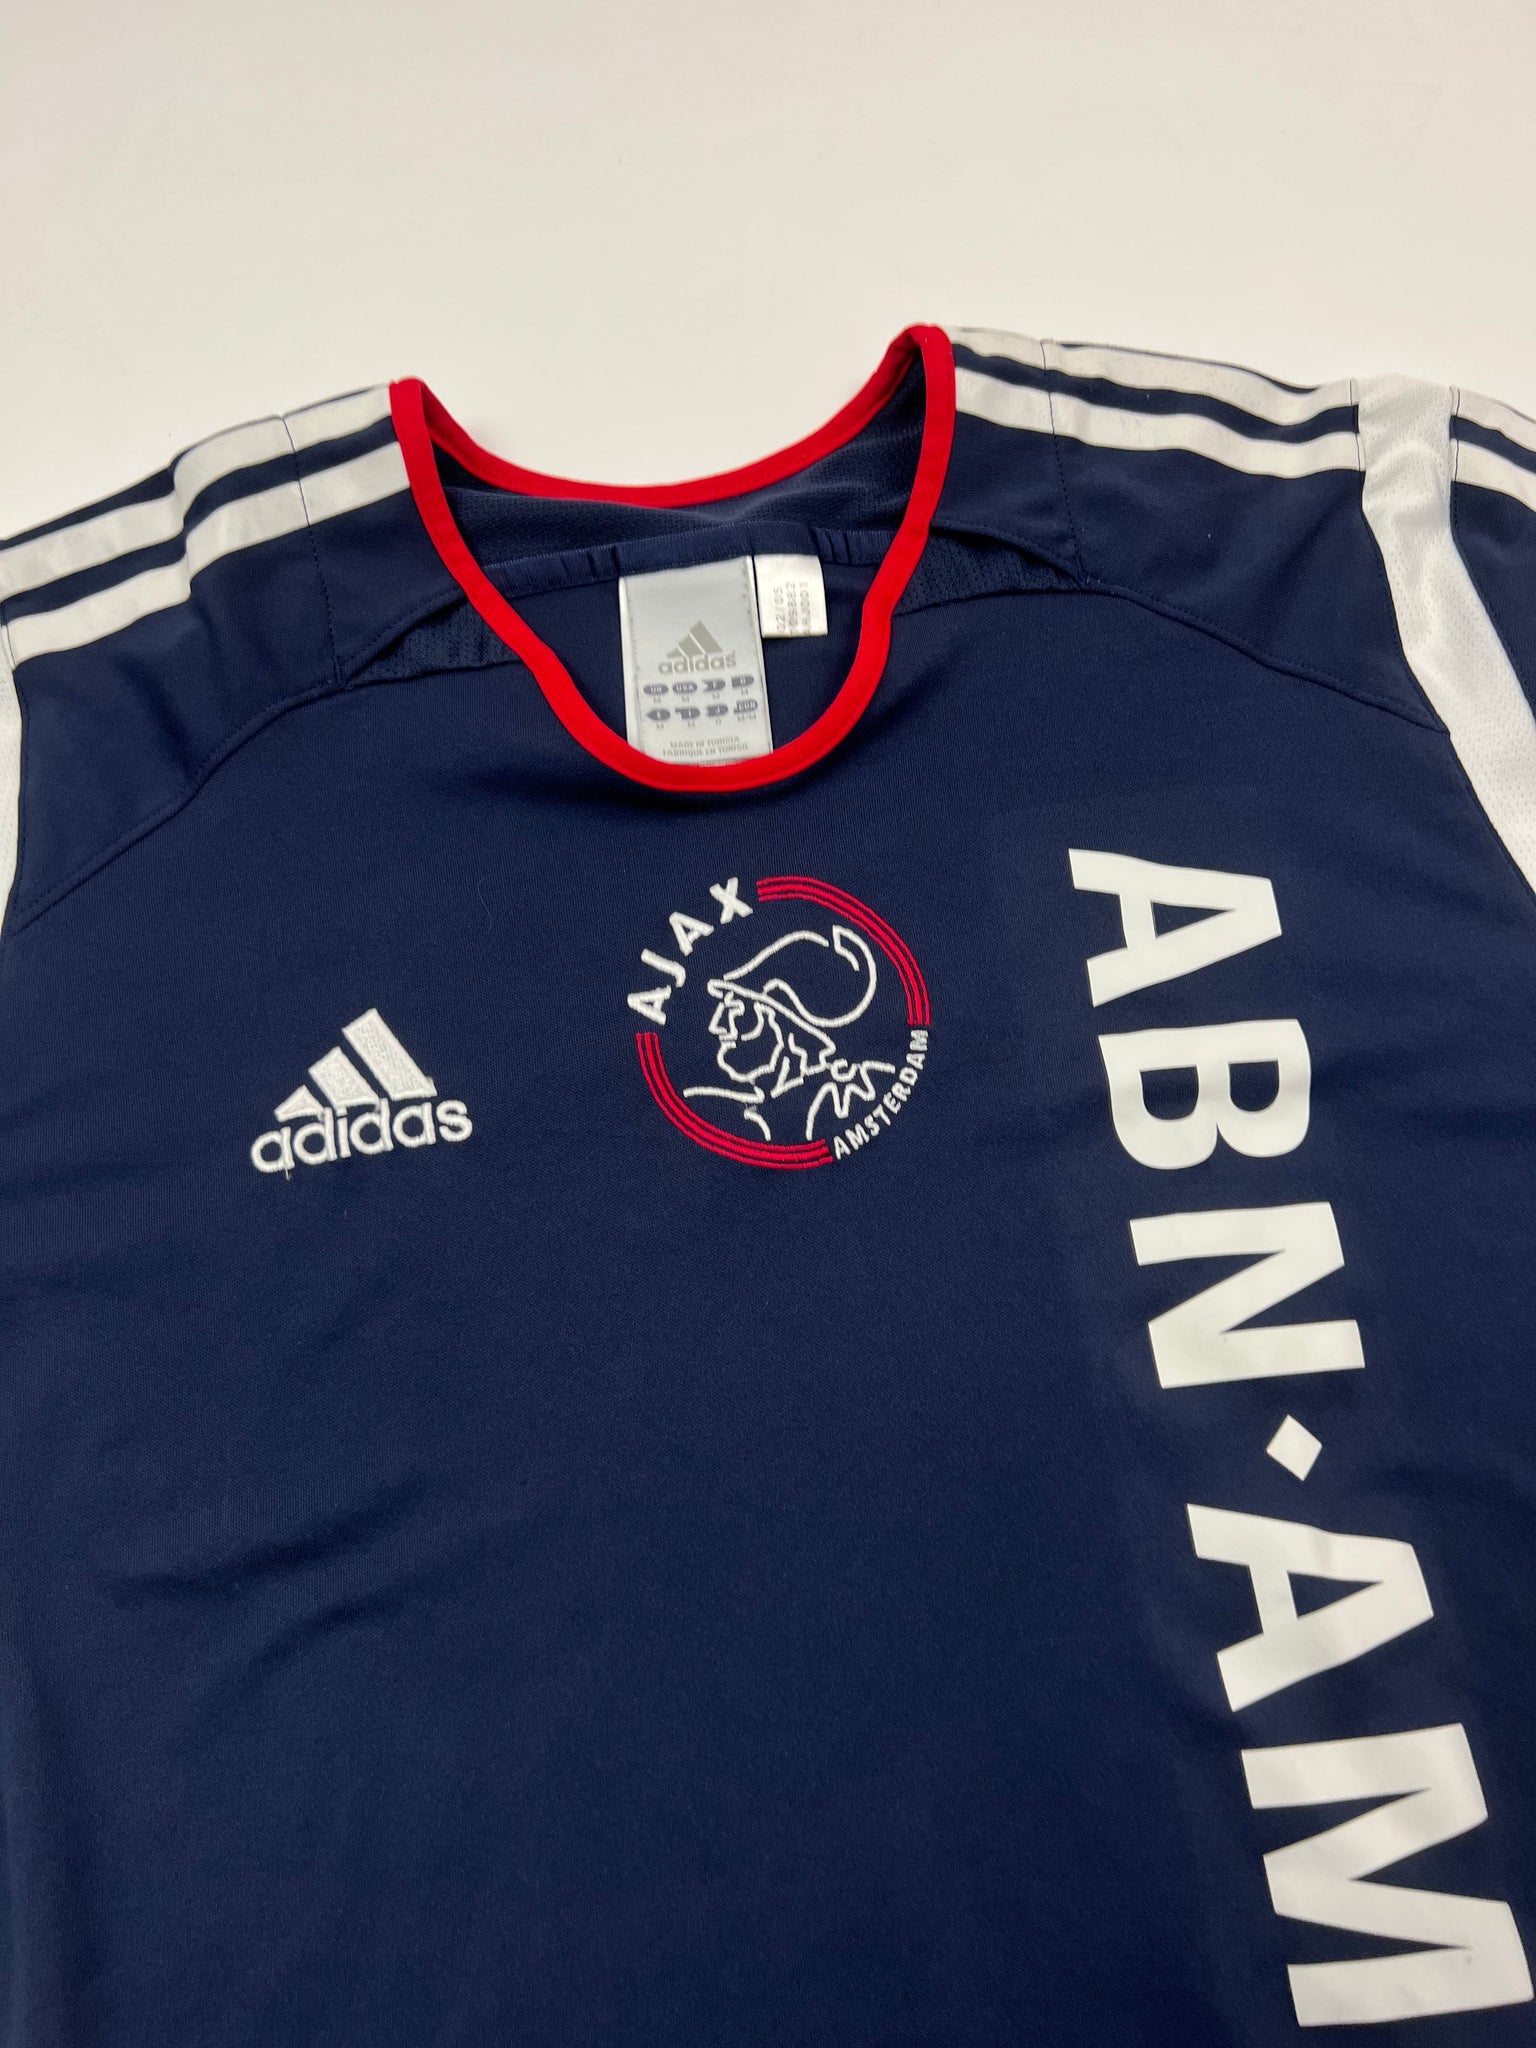 Adidas Ajax Amsterdam Jersey (M)